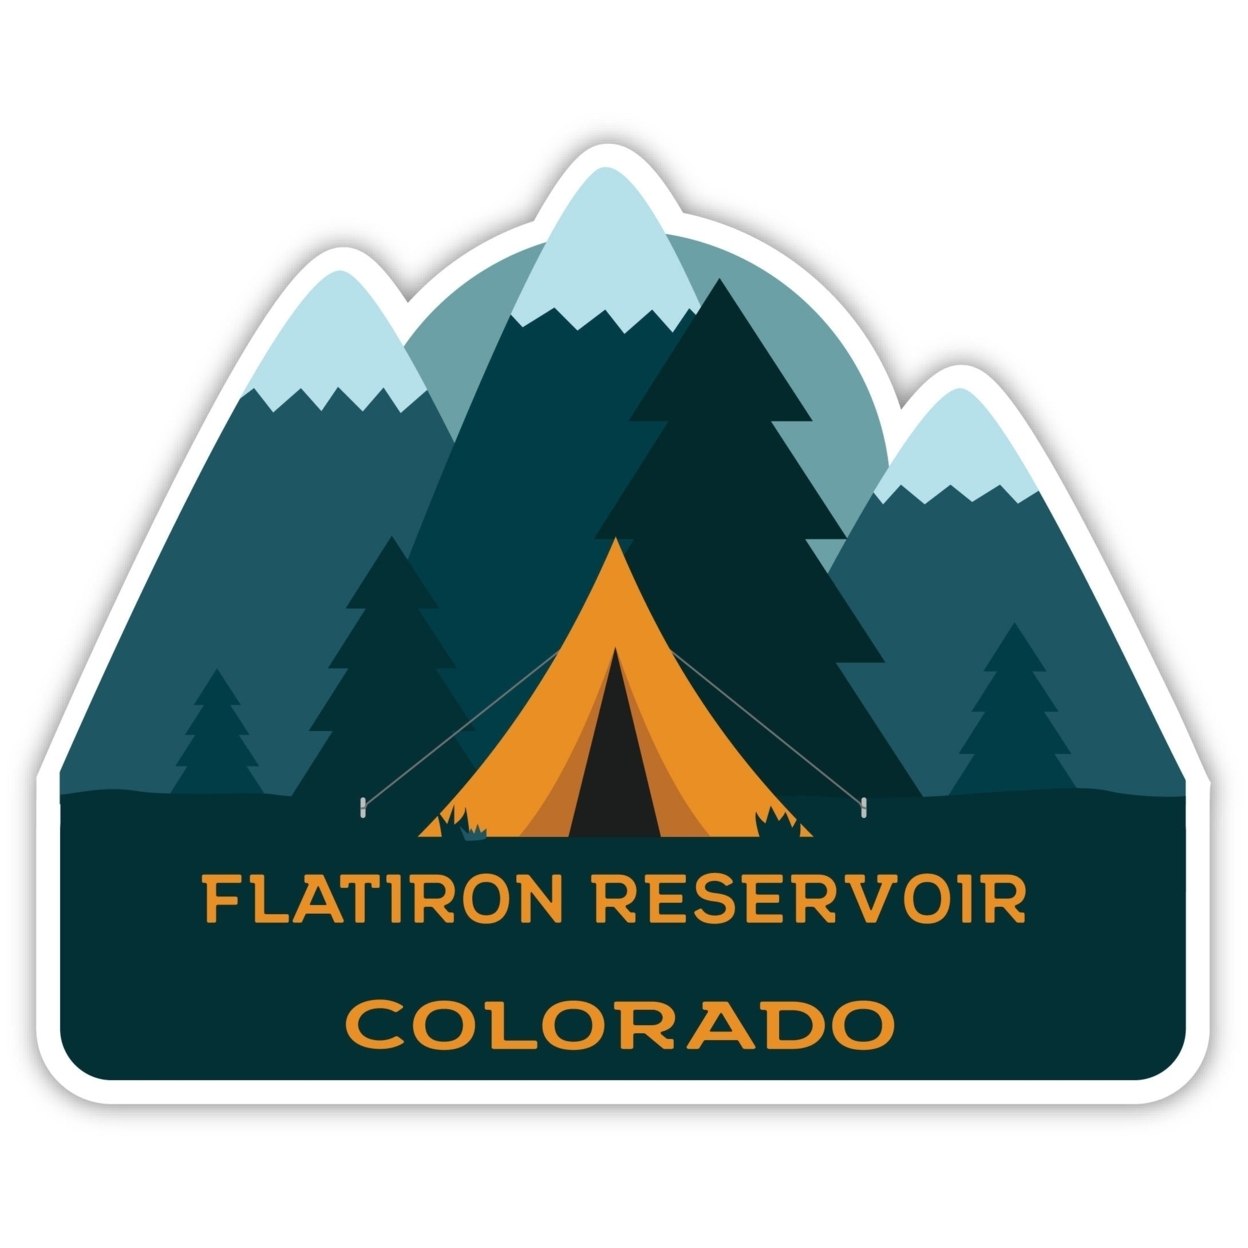 Flatiron Reservoir Colorado Souvenir Decorative Stickers (Choose Theme And Size) - 4-Pack, 2-Inch, Tent